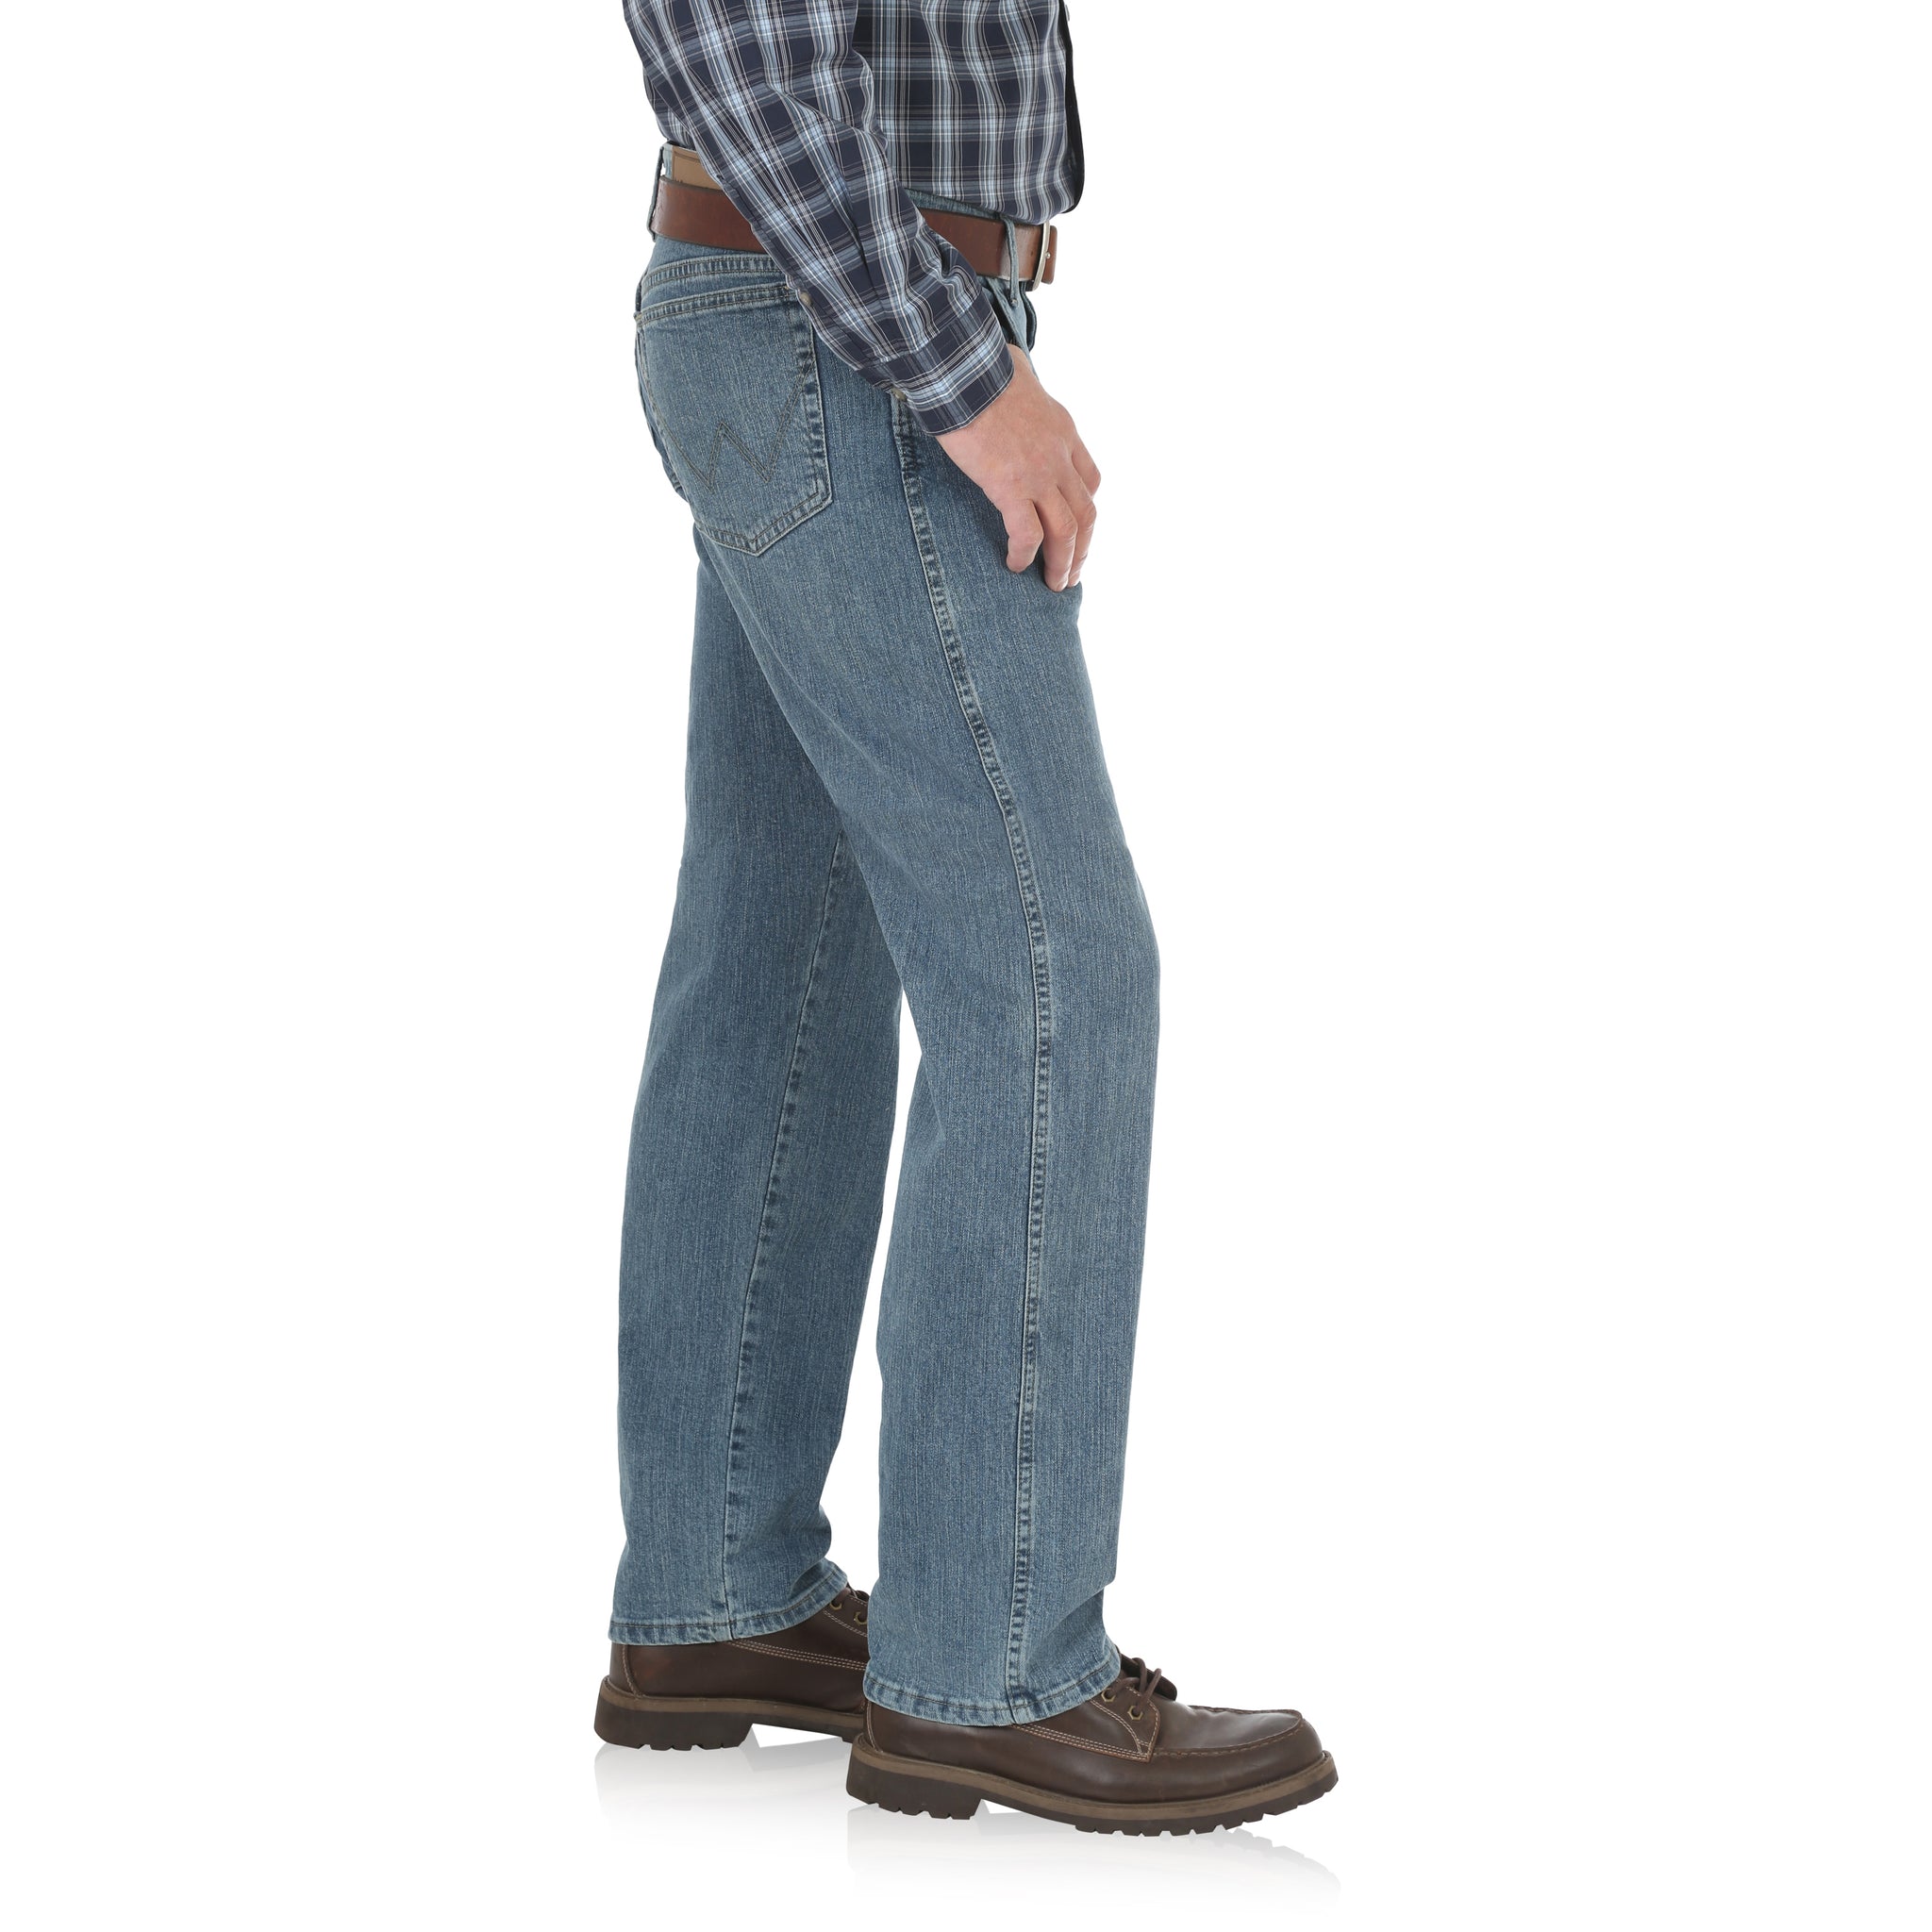 Jeans Men\'s Good\'s Online Store Fit 39952 Wrangler – Rugged Wear Regular